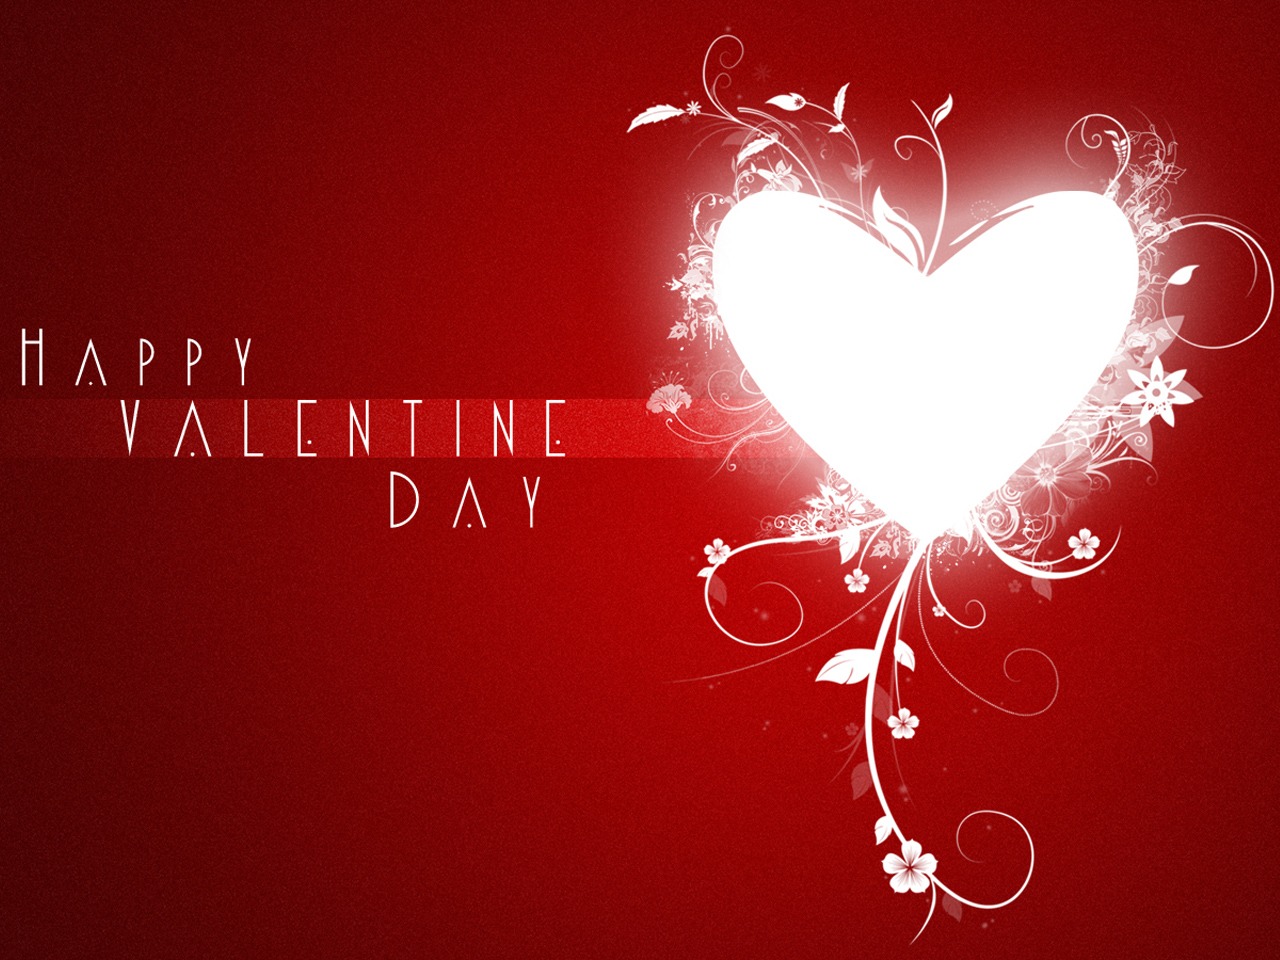 http://2.bp.blogspot.com/-kozZK-bcy7I/UR1liAUeTGI/AAAAAAAABI4/EuY_ySwaP74/s1600/Happy+Valentines+Day+Wallpapers+(41).jpg